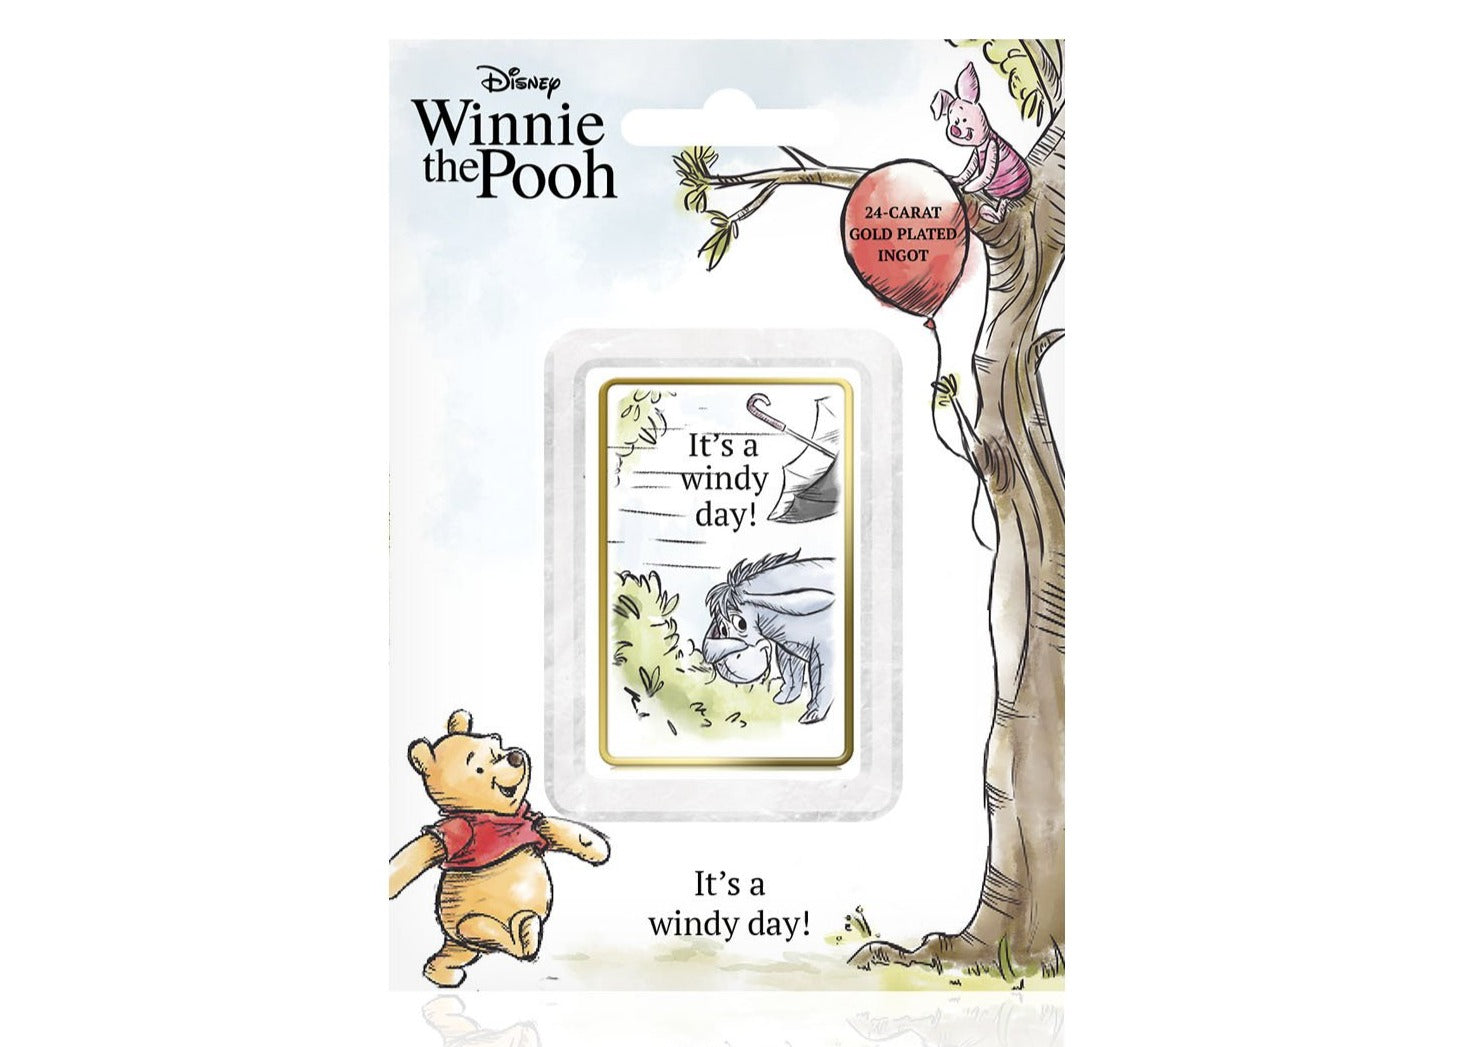 Disney Winnie the Pooh, Lingotes bañados en Oro 24 Quilates - It's A Windy Day